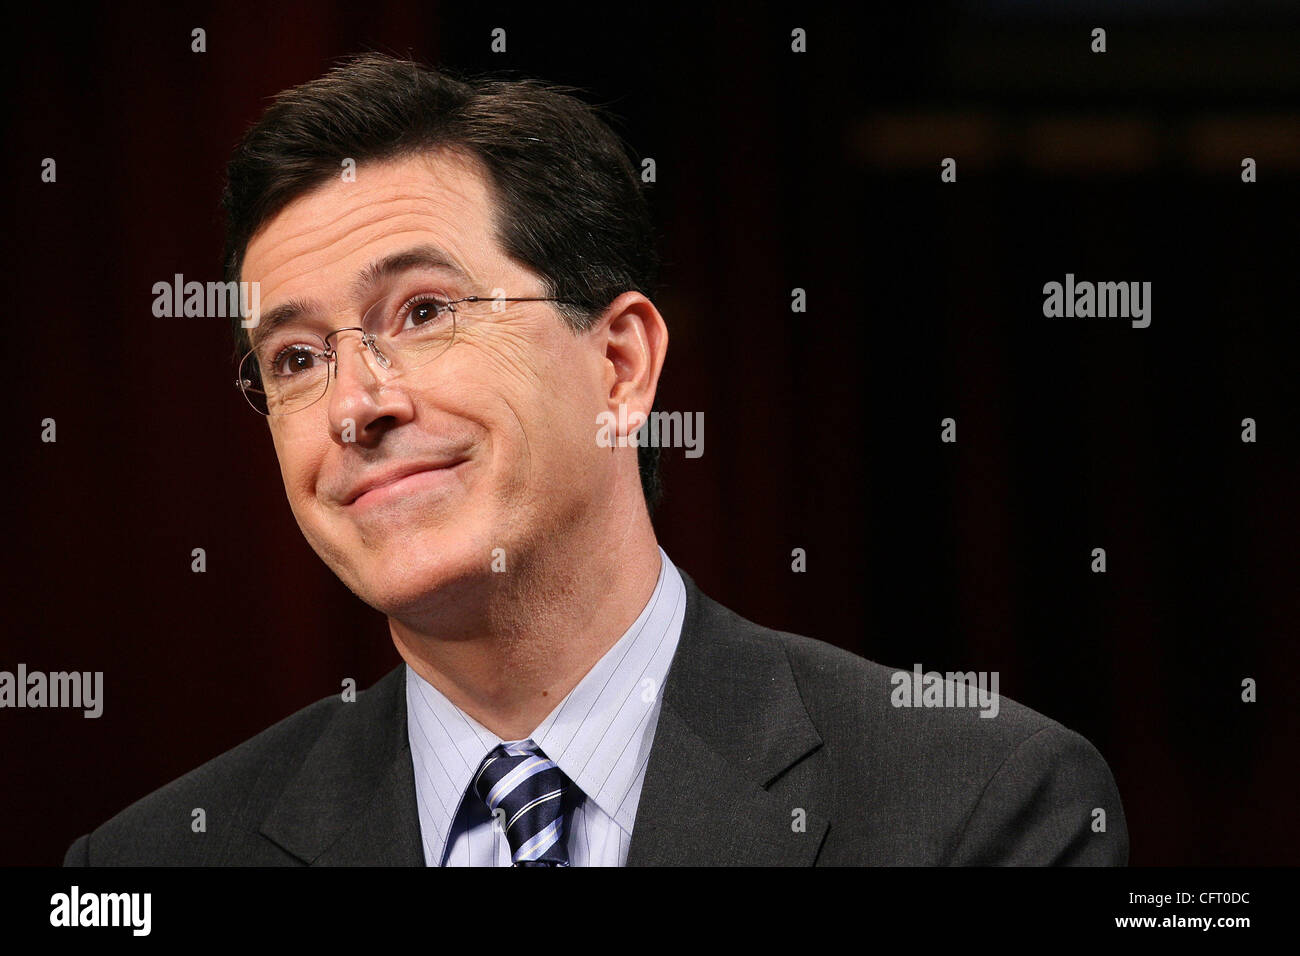 12/1/06 - CAMBRIDGE, MA Stephen Colbert at Harvard Stock Photo